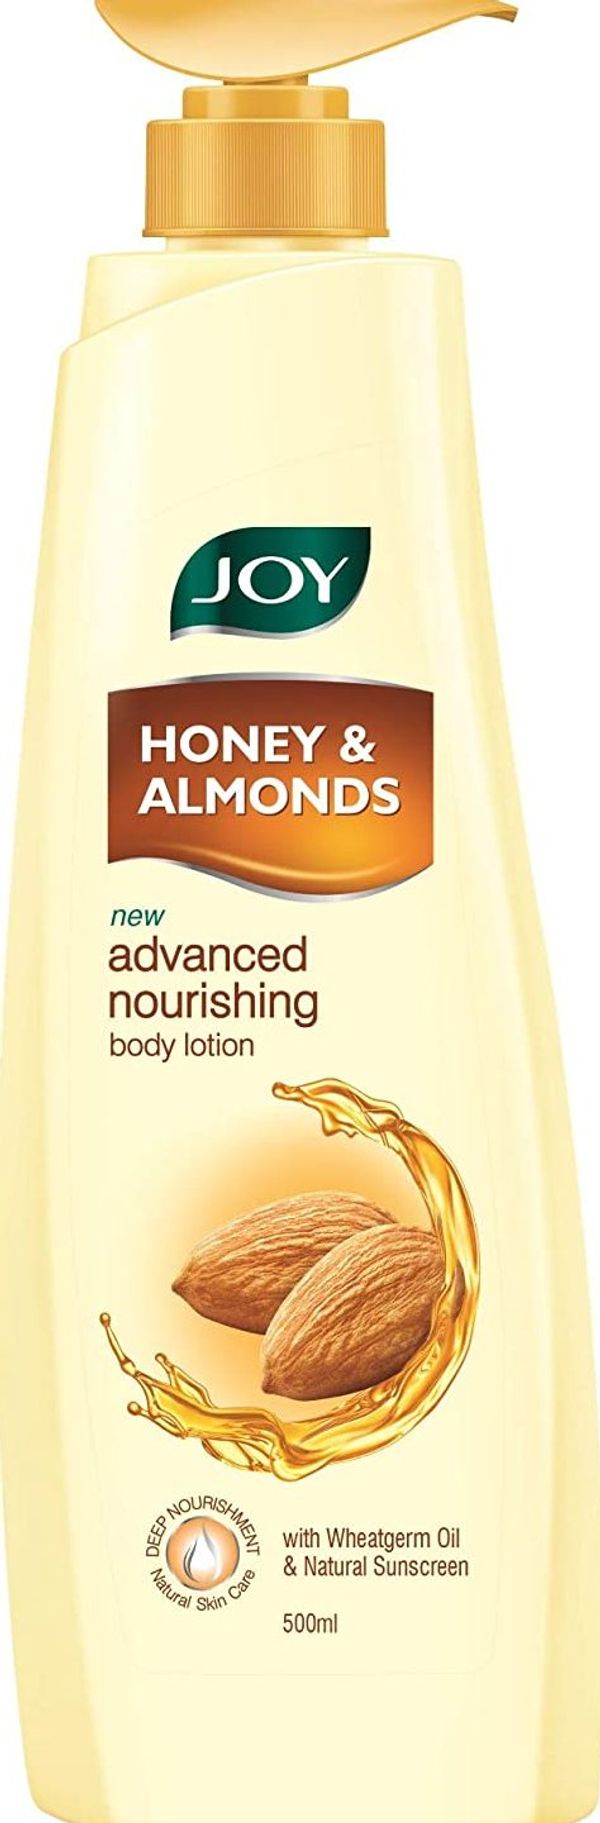 Joy Honey & Almonds Advanced Nourishing Body Lotion, For Normal to Dry skin 500ml